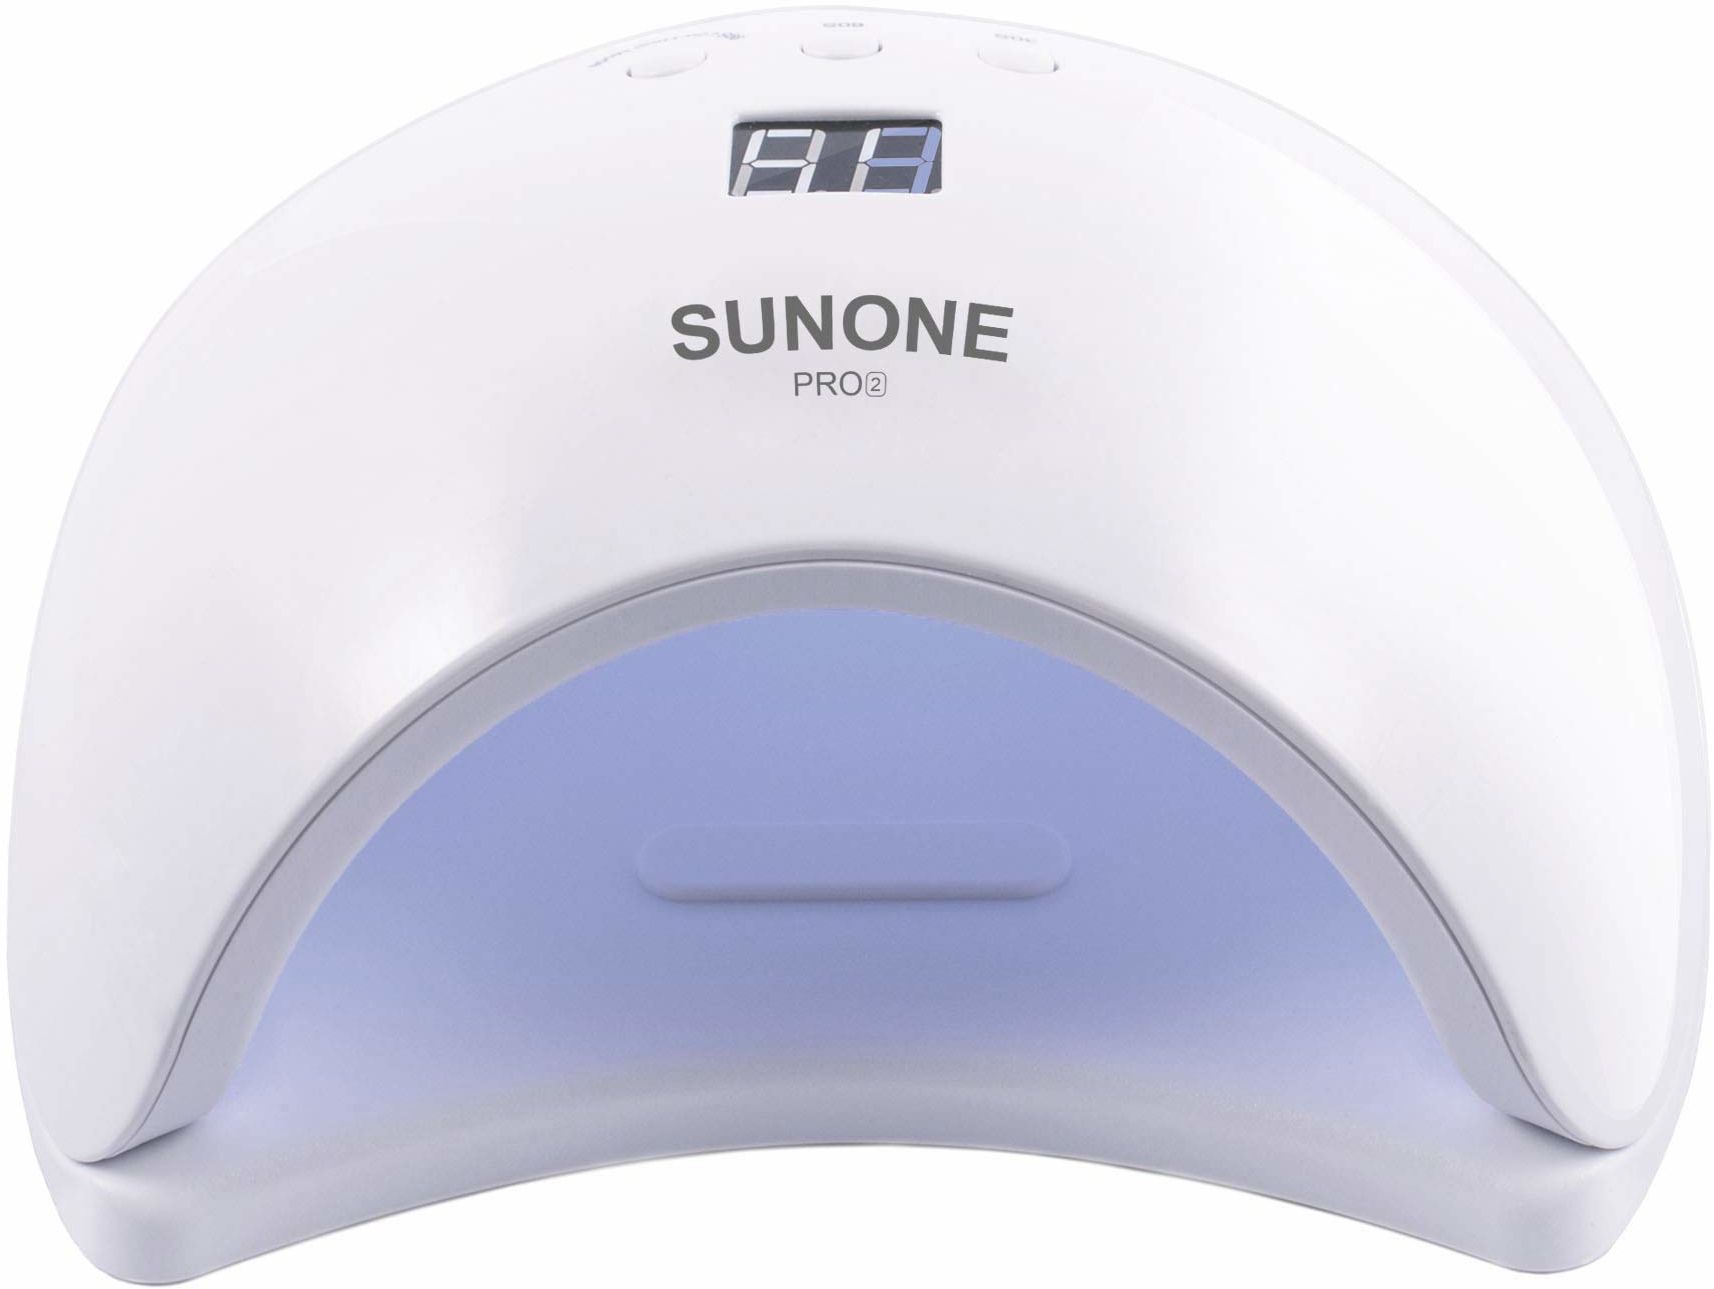 Sunone Pro2 Lampa UV LED 50W, Hybrydy Żele 14959 Biały